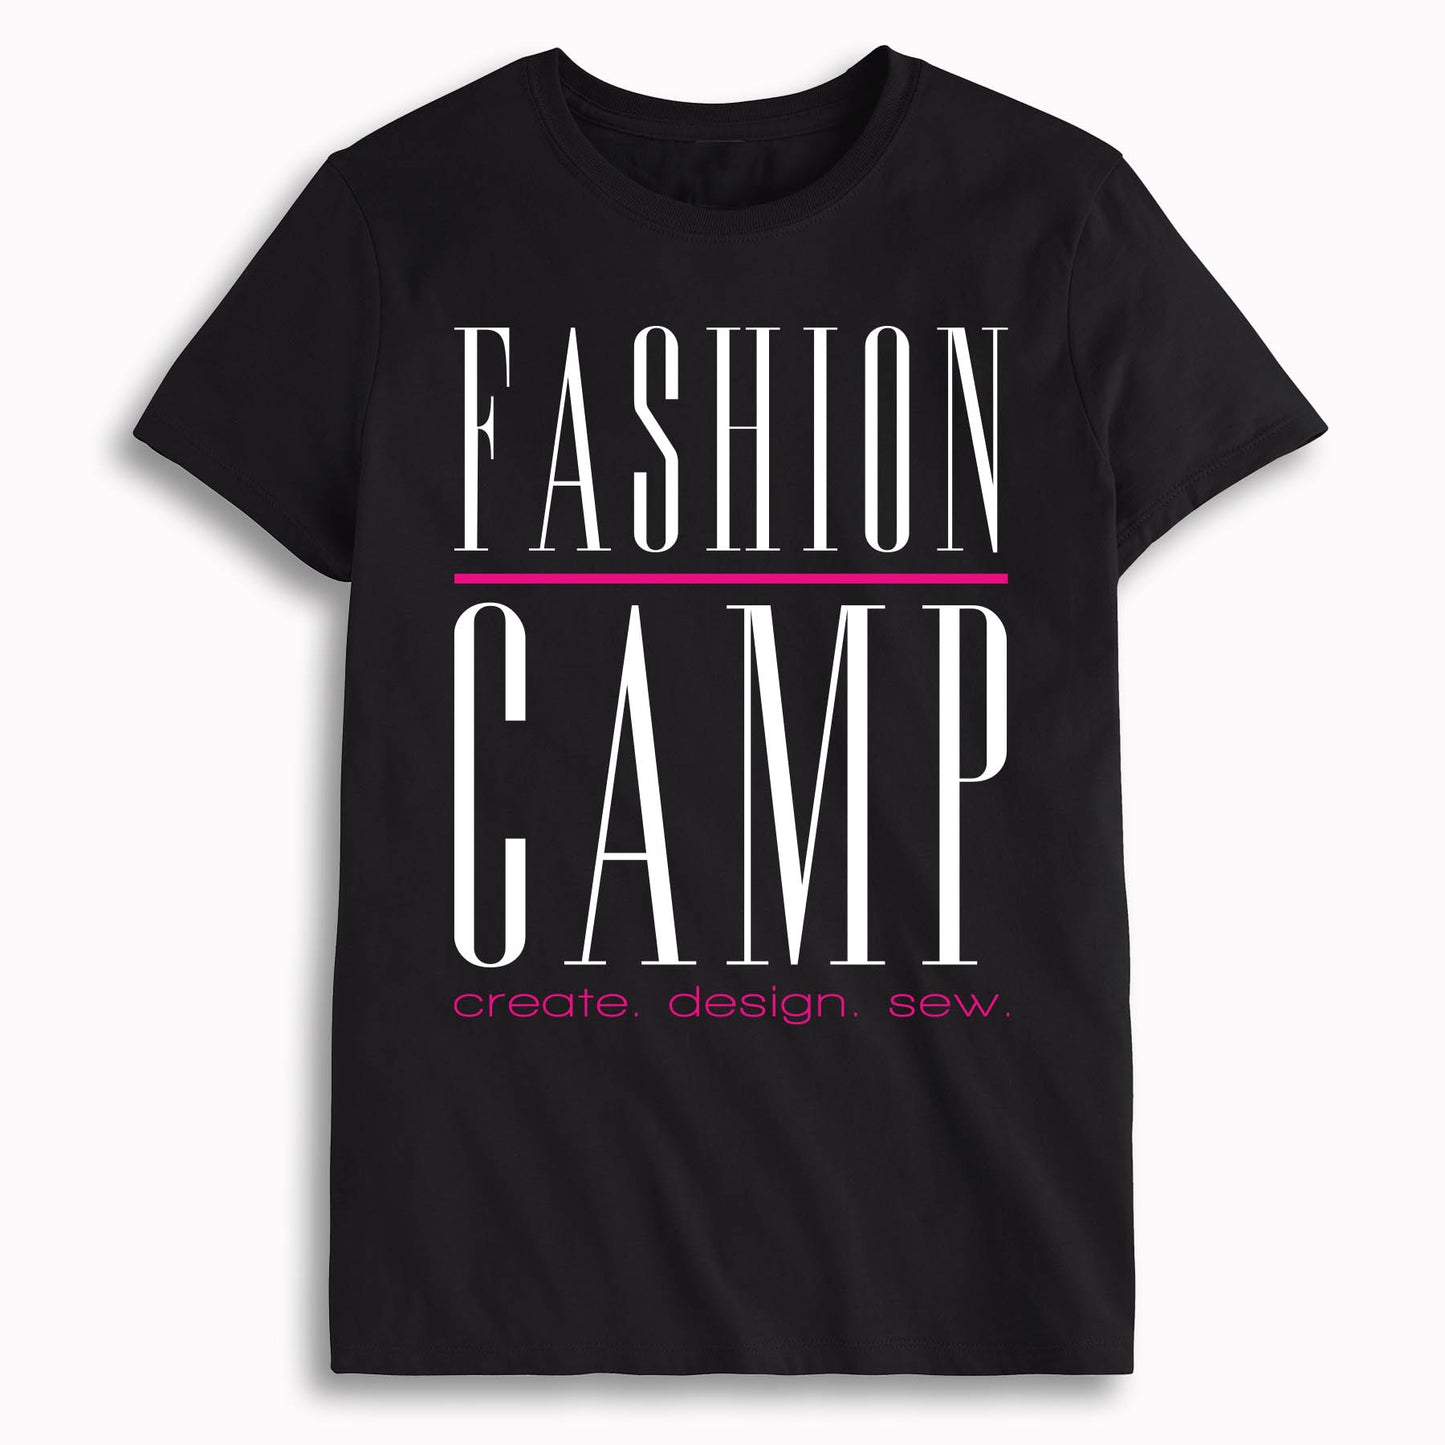 "Fashion Camp" Big Tee - Black T-Shirt